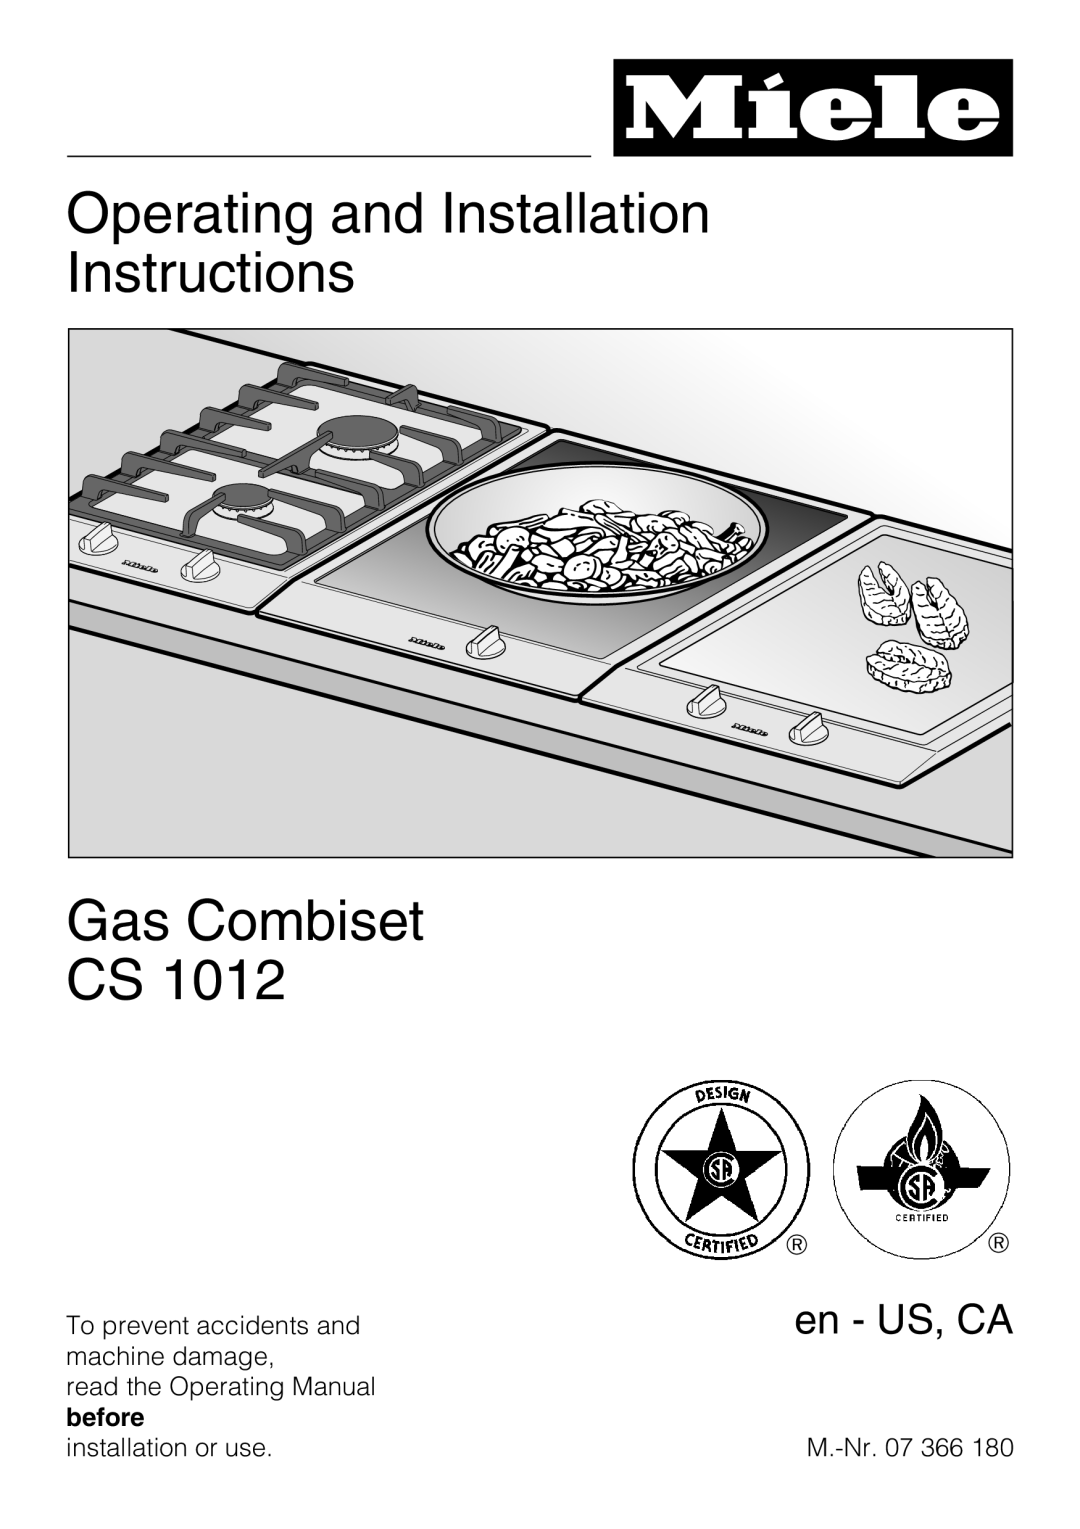 Miele CS1012 installation instructions Operating and Installation Instructions Gas Combiset CS, en - US, CA 